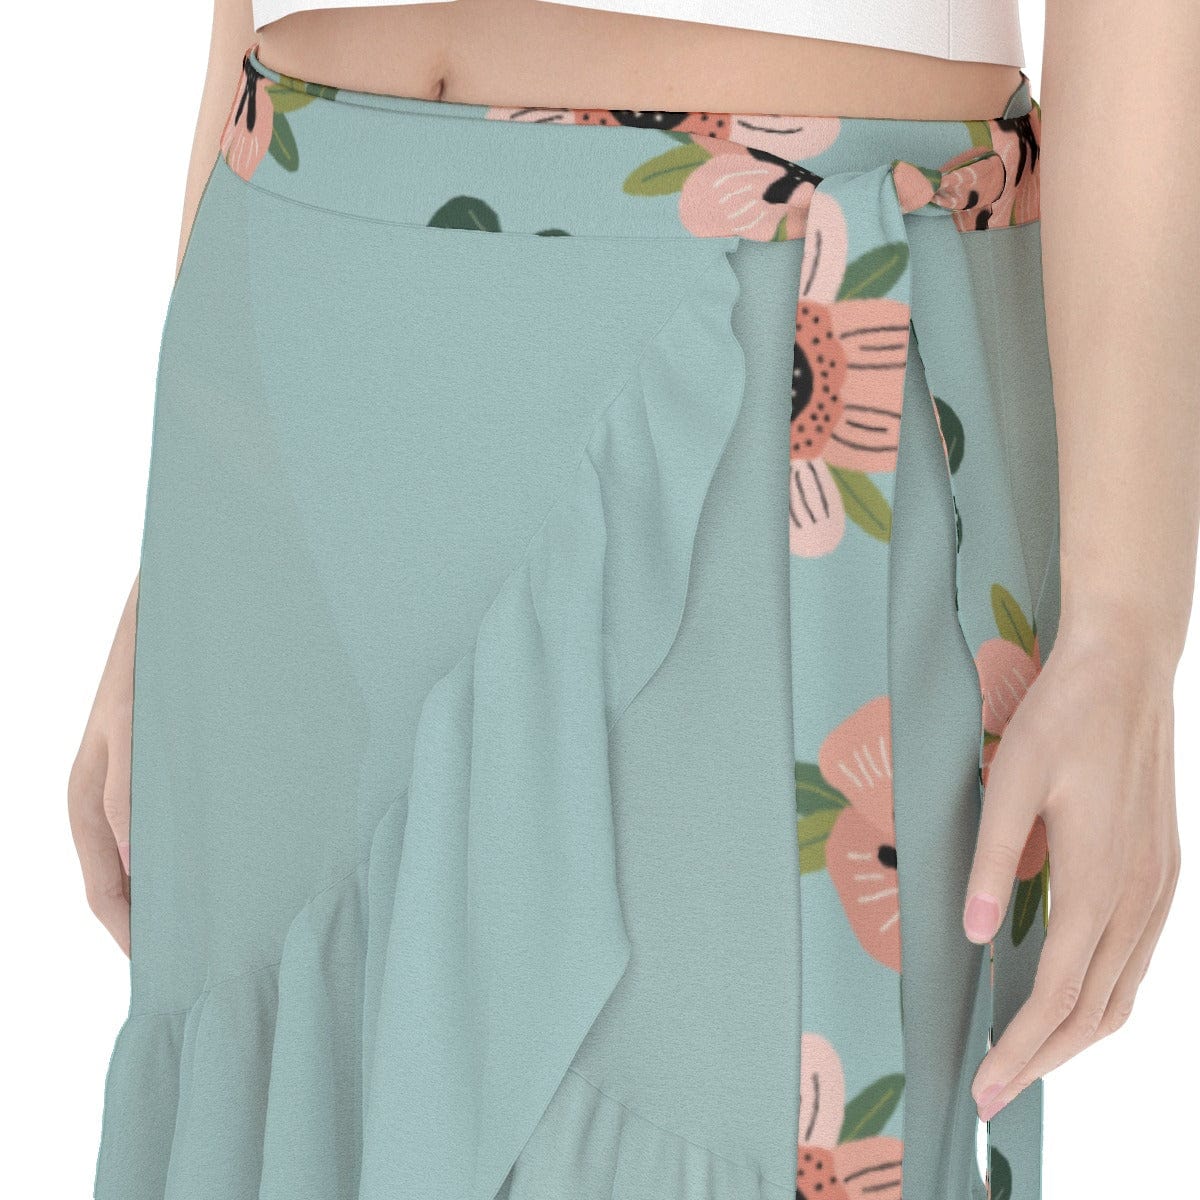 Yoycol 2XL / Green Blue Green Coral Floral skirt -  Women's Wrap Skirt